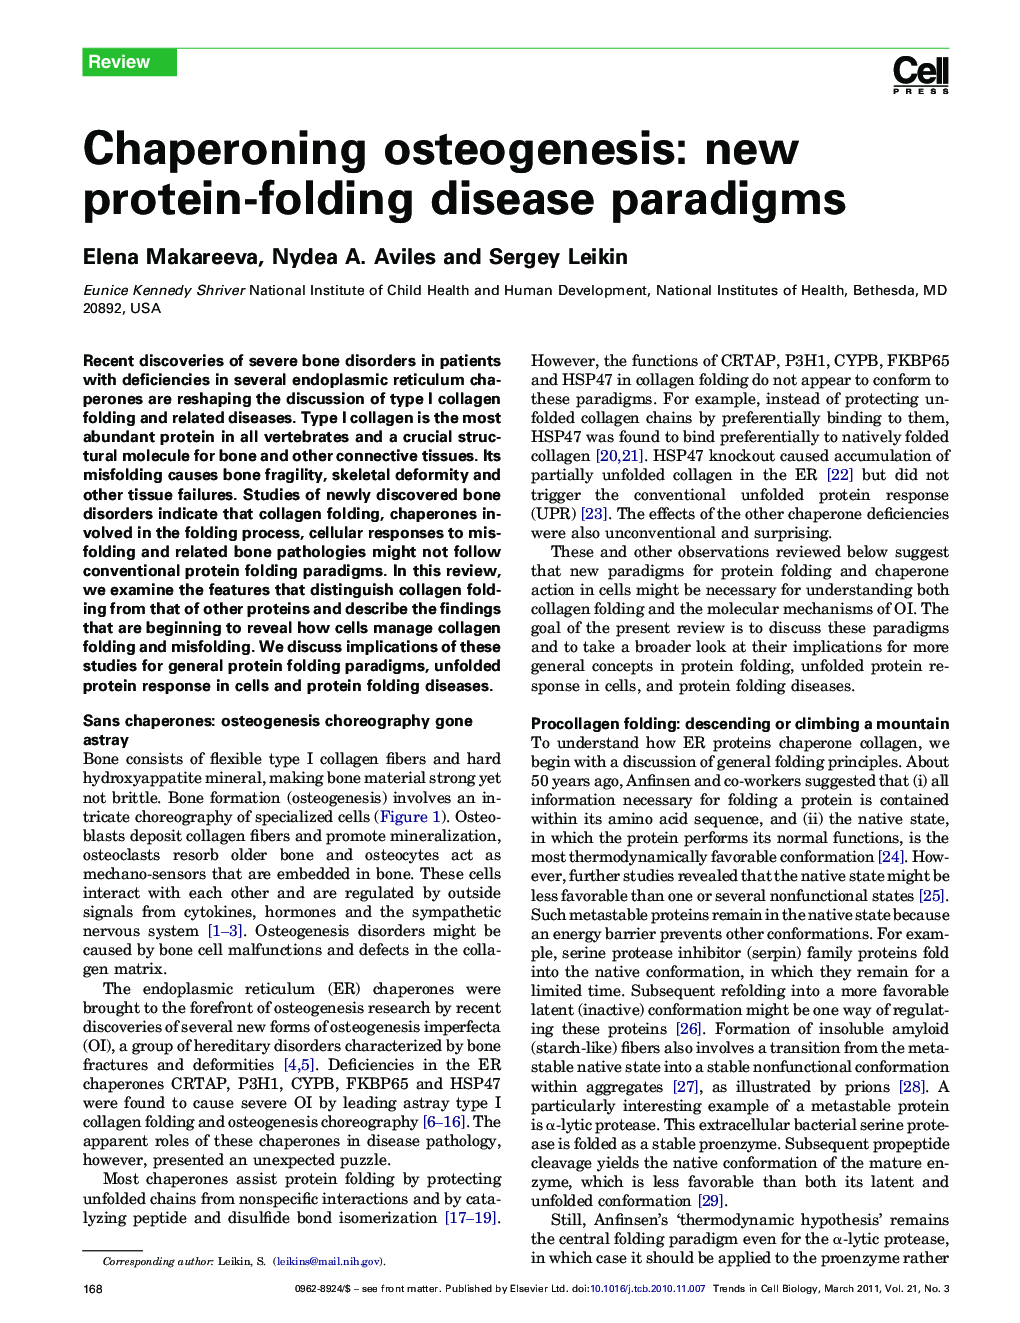 Chaperoning osteogenesis: new protein-folding disease paradigms